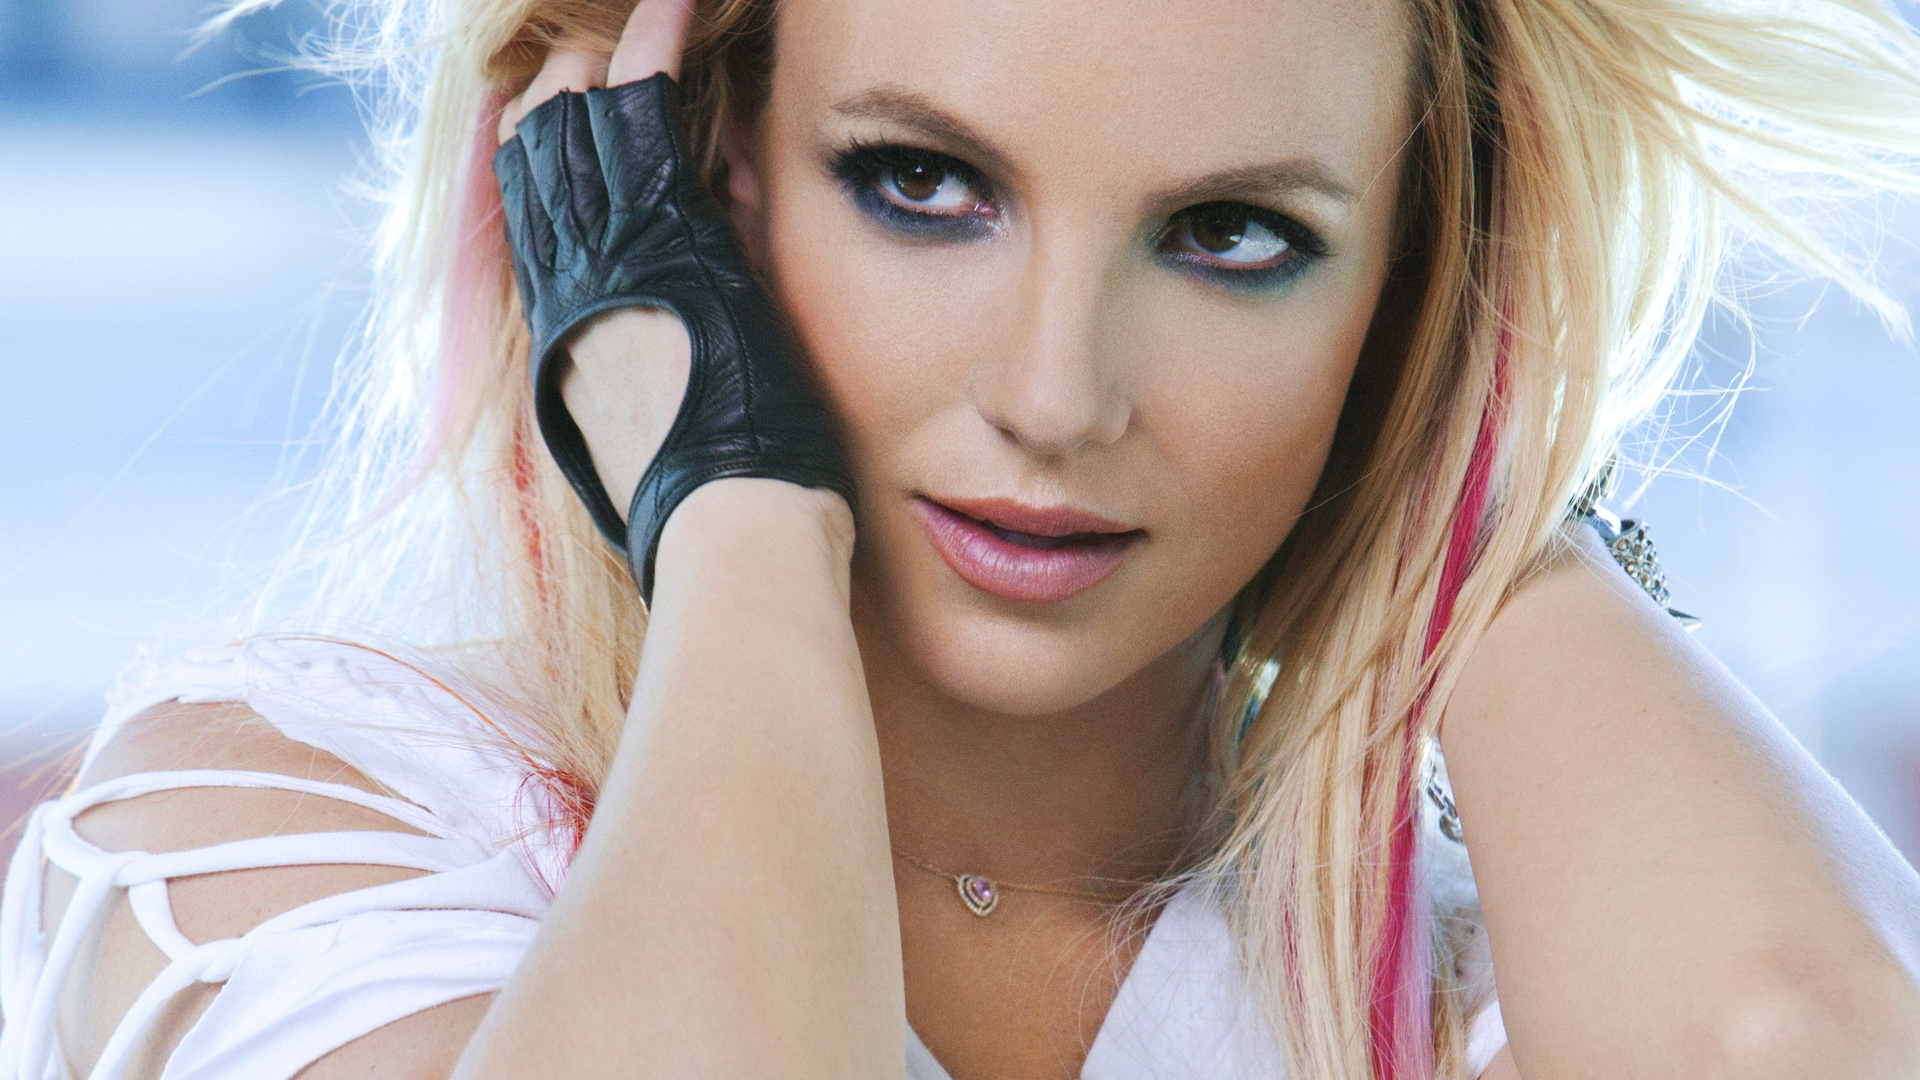 Wallpaper ID 429225  Music Britney Spears Phone Wallpaper Pop Music  750x1334 free download